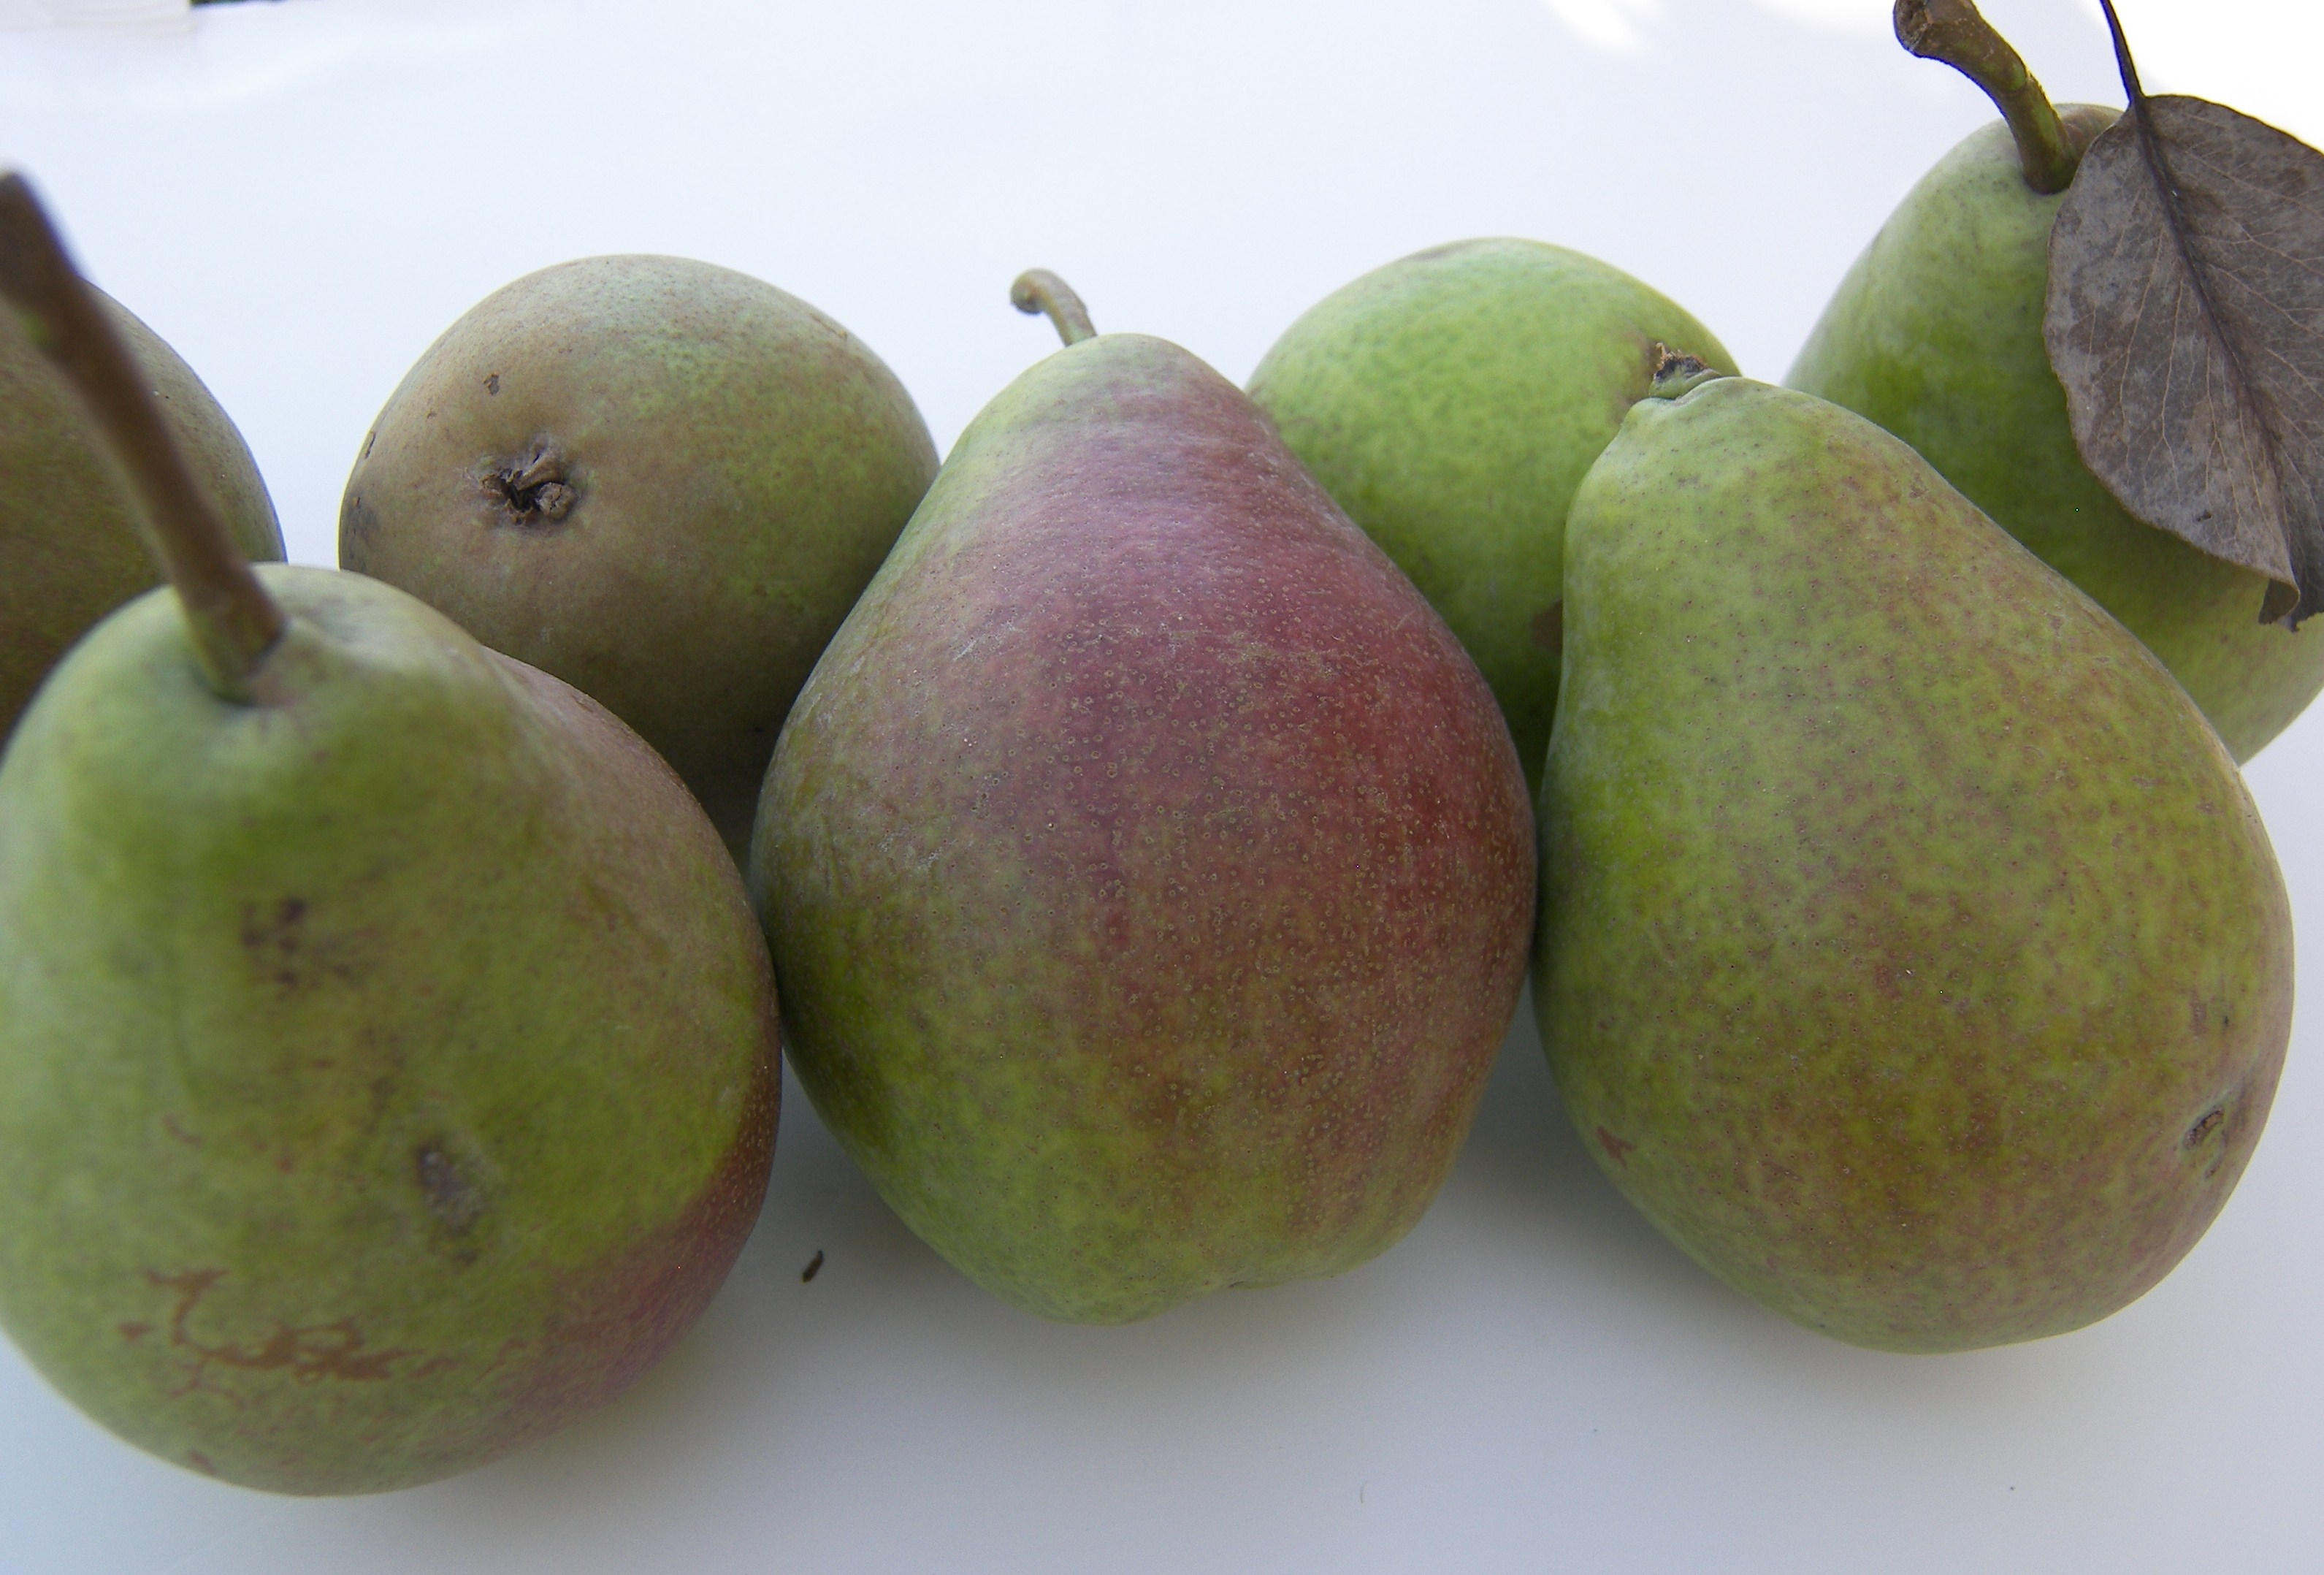 Clapp's Favorite Pears - Eat Like No One Else